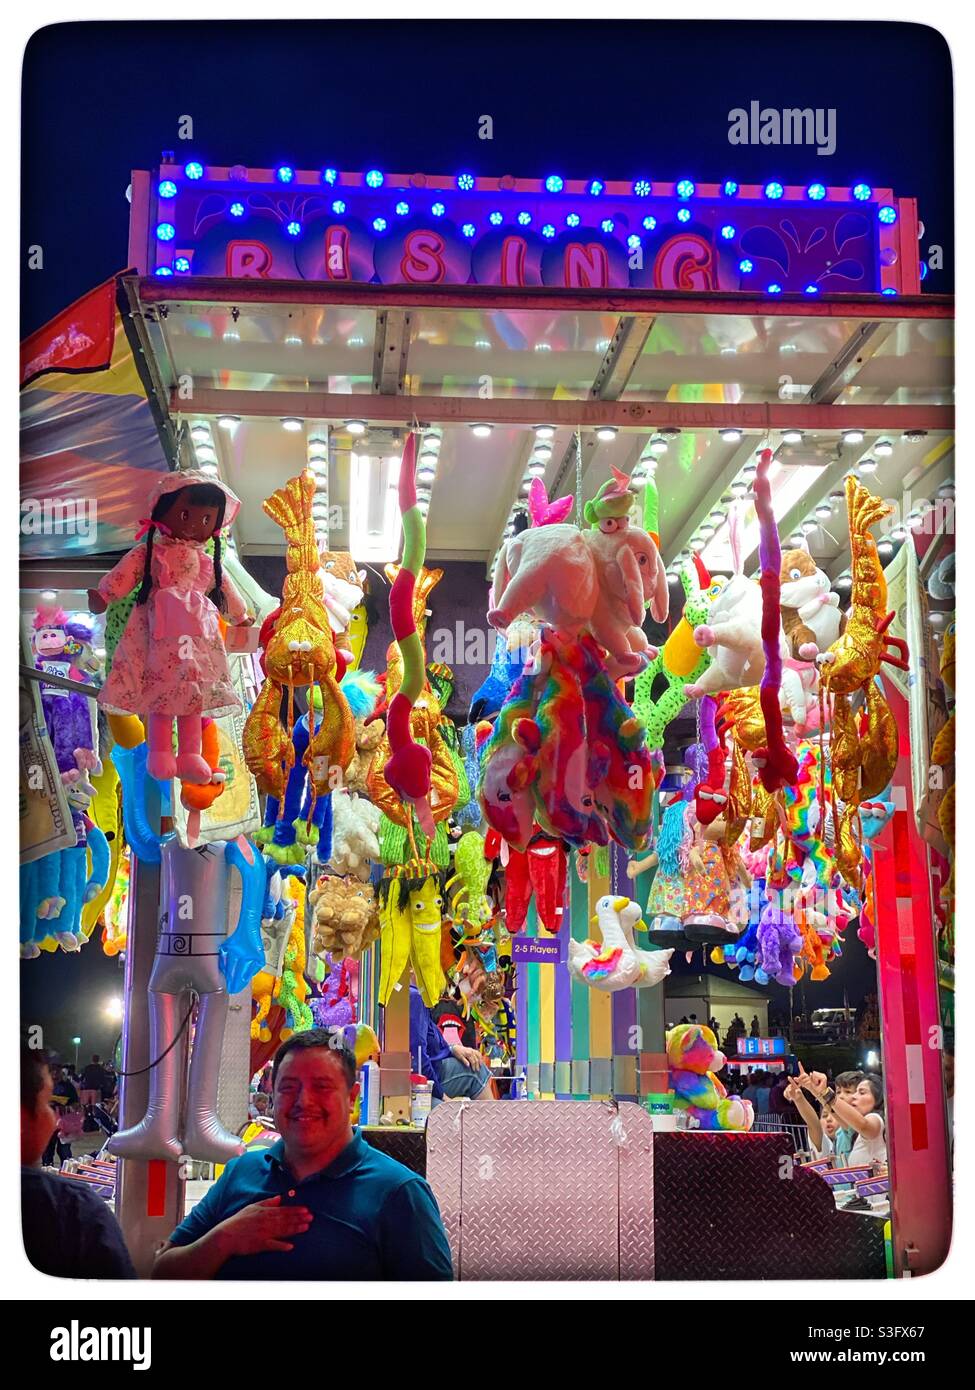 Carnival games at the fair Stock Photo